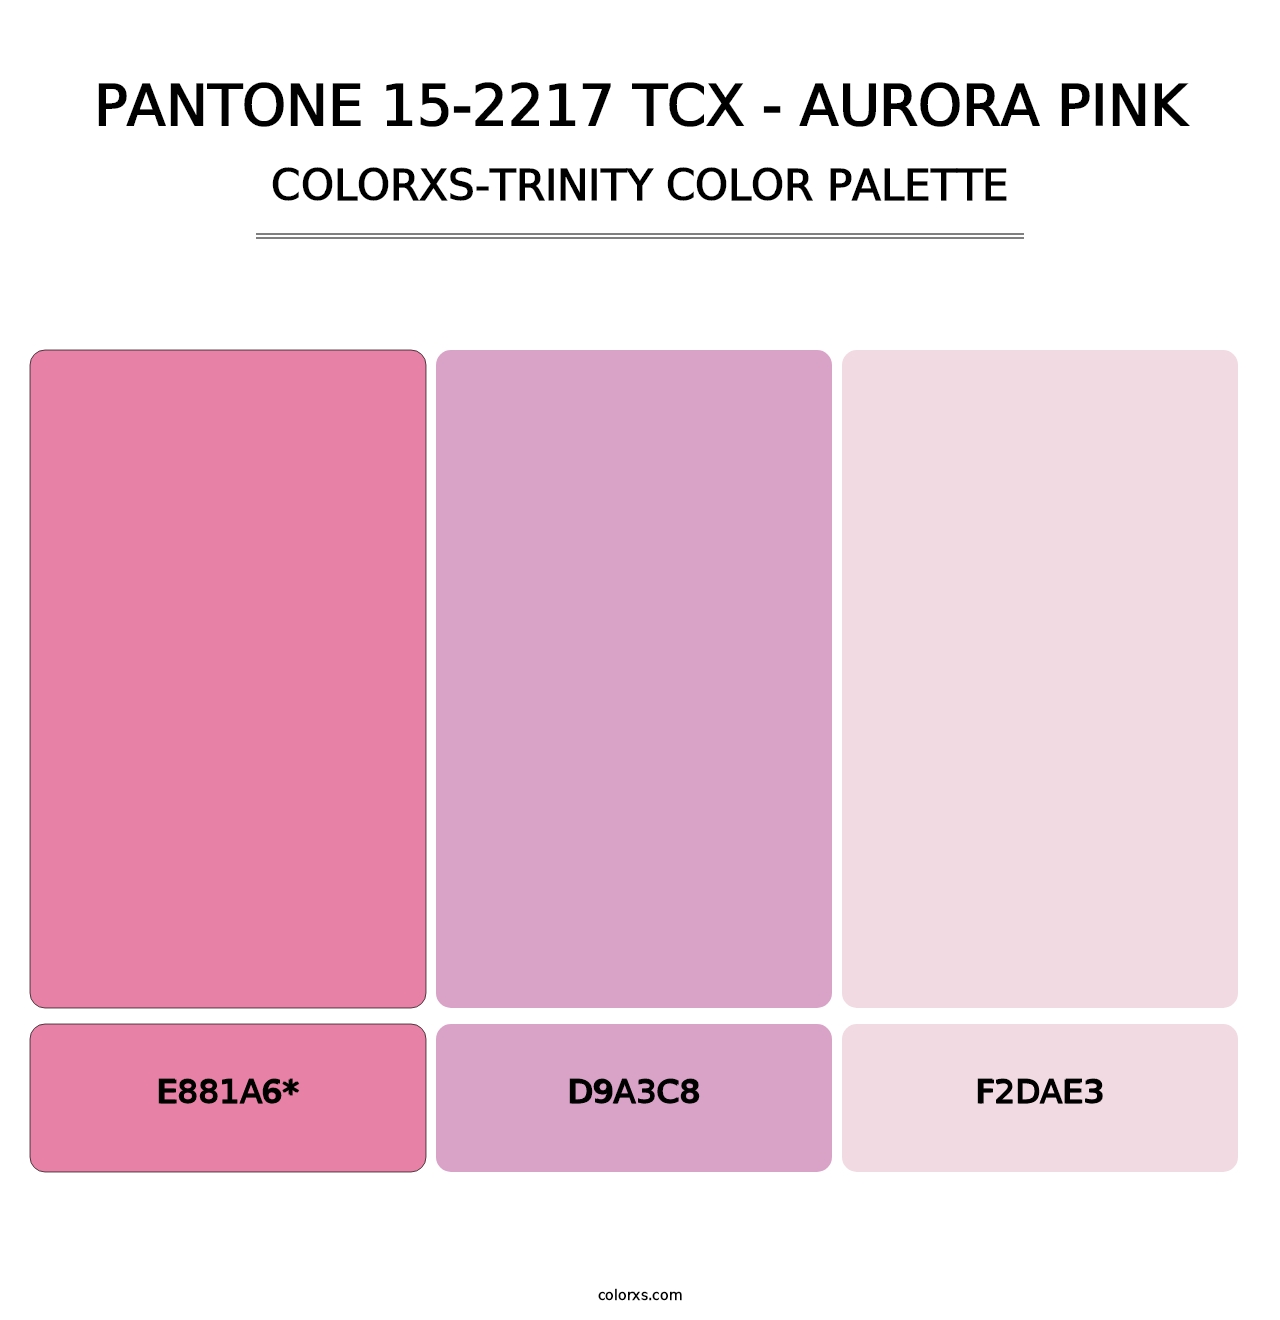 PANTONE 15-2217 TCX - Aurora Pink - Colorxs Trinity Palette